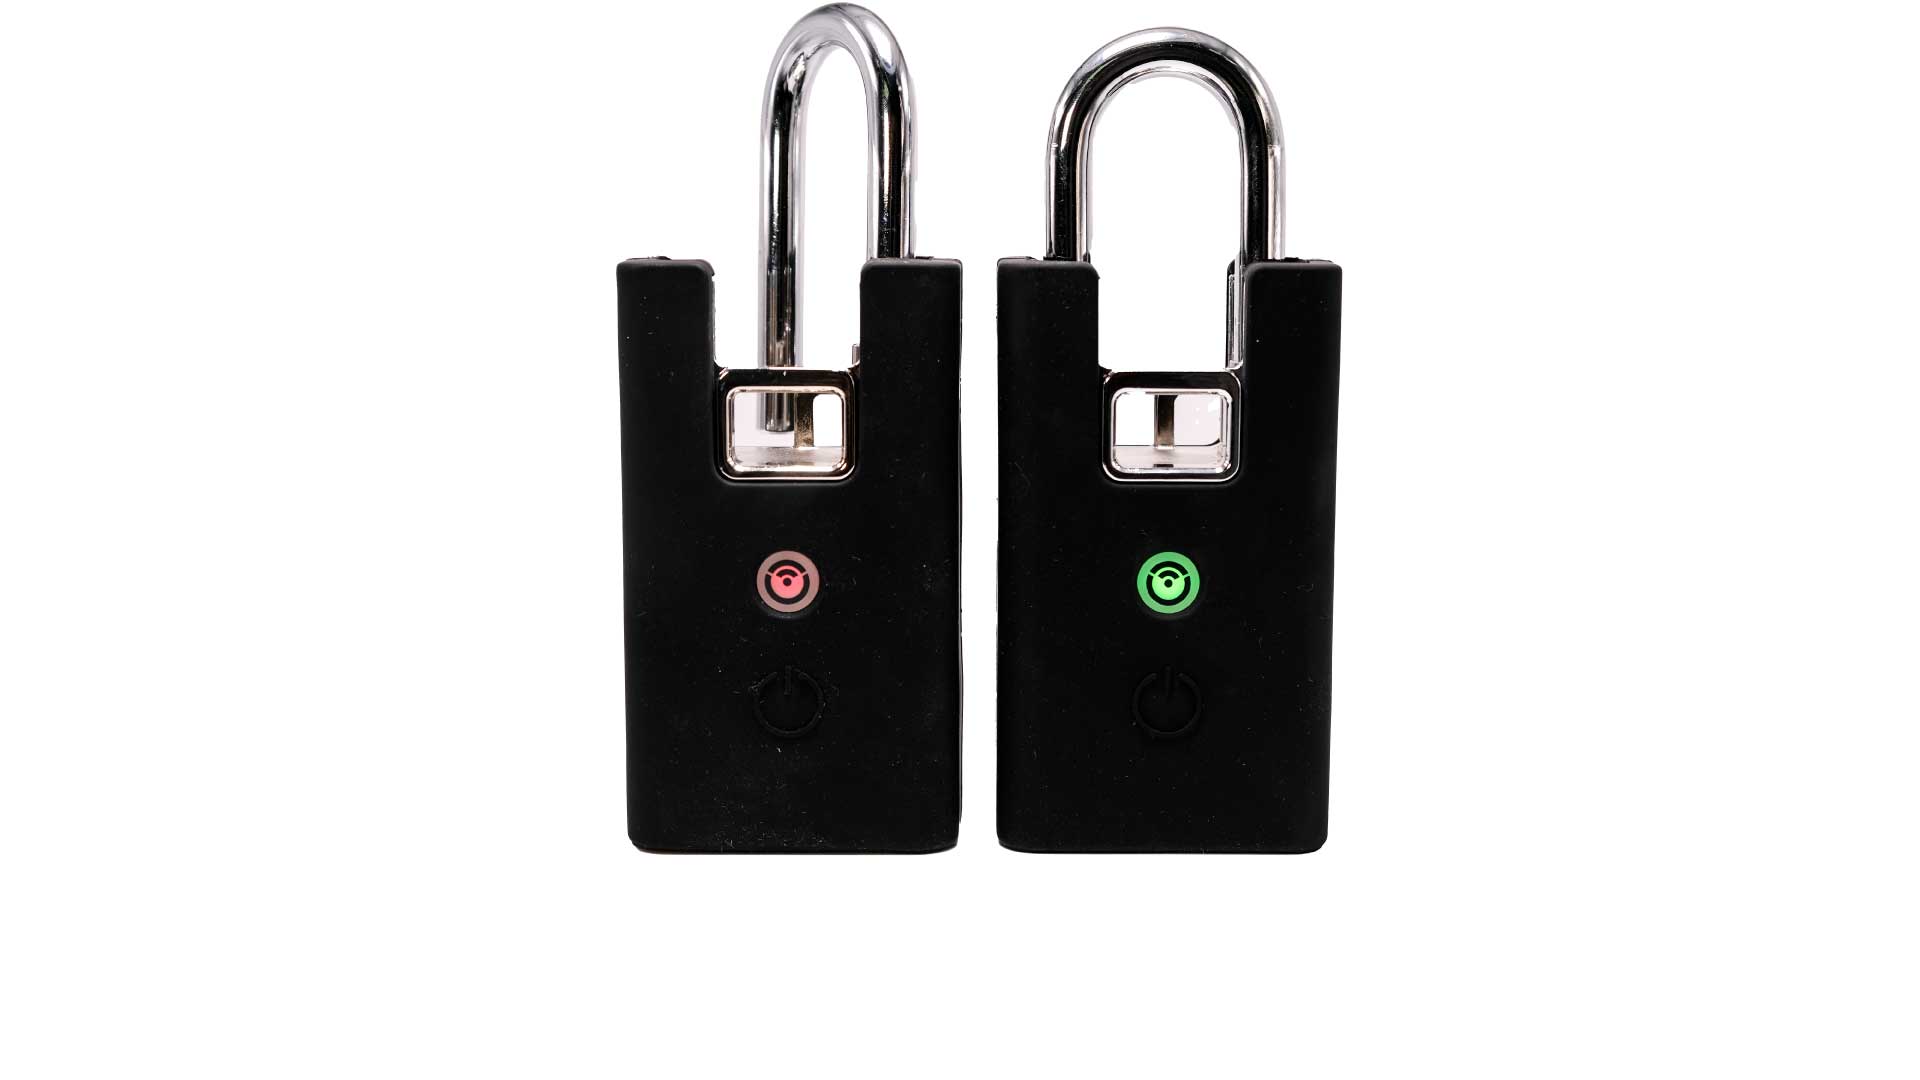 Two digital keyless locks. One locked and one unlocked.